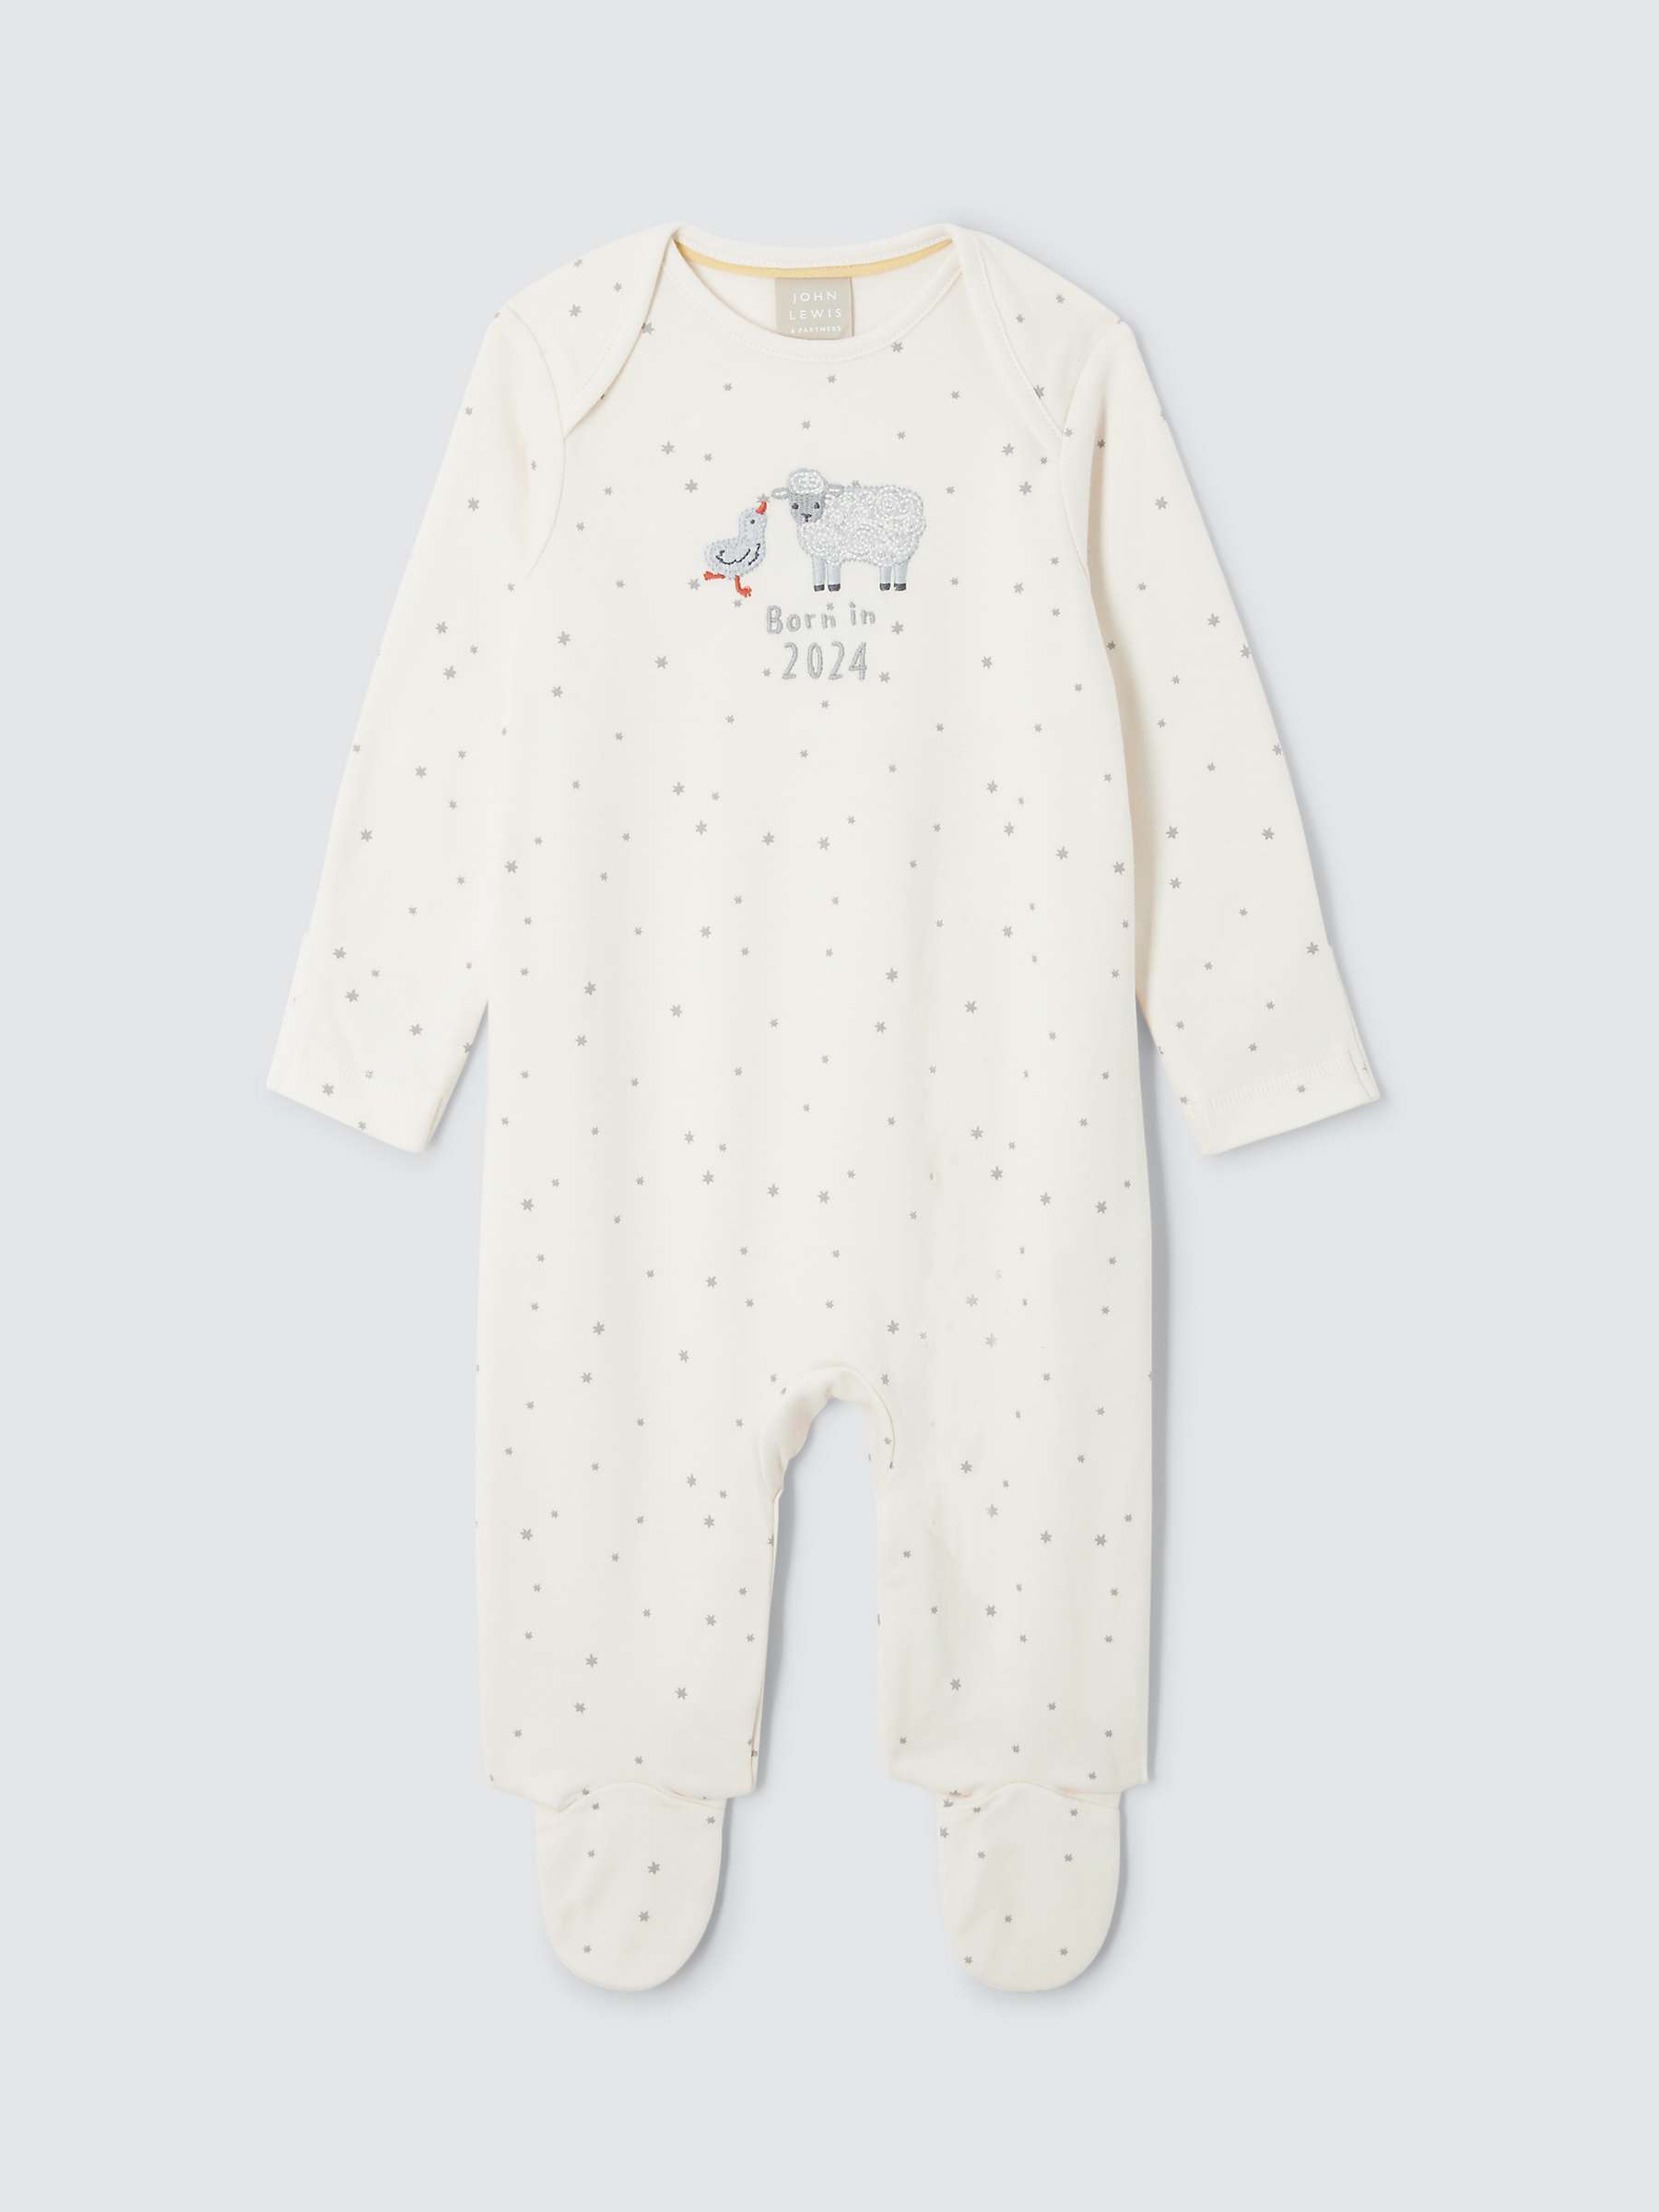 Buy John Lewis Baby Born in 2024 Star Sleepsuit, Cream Online at johnlewis.com